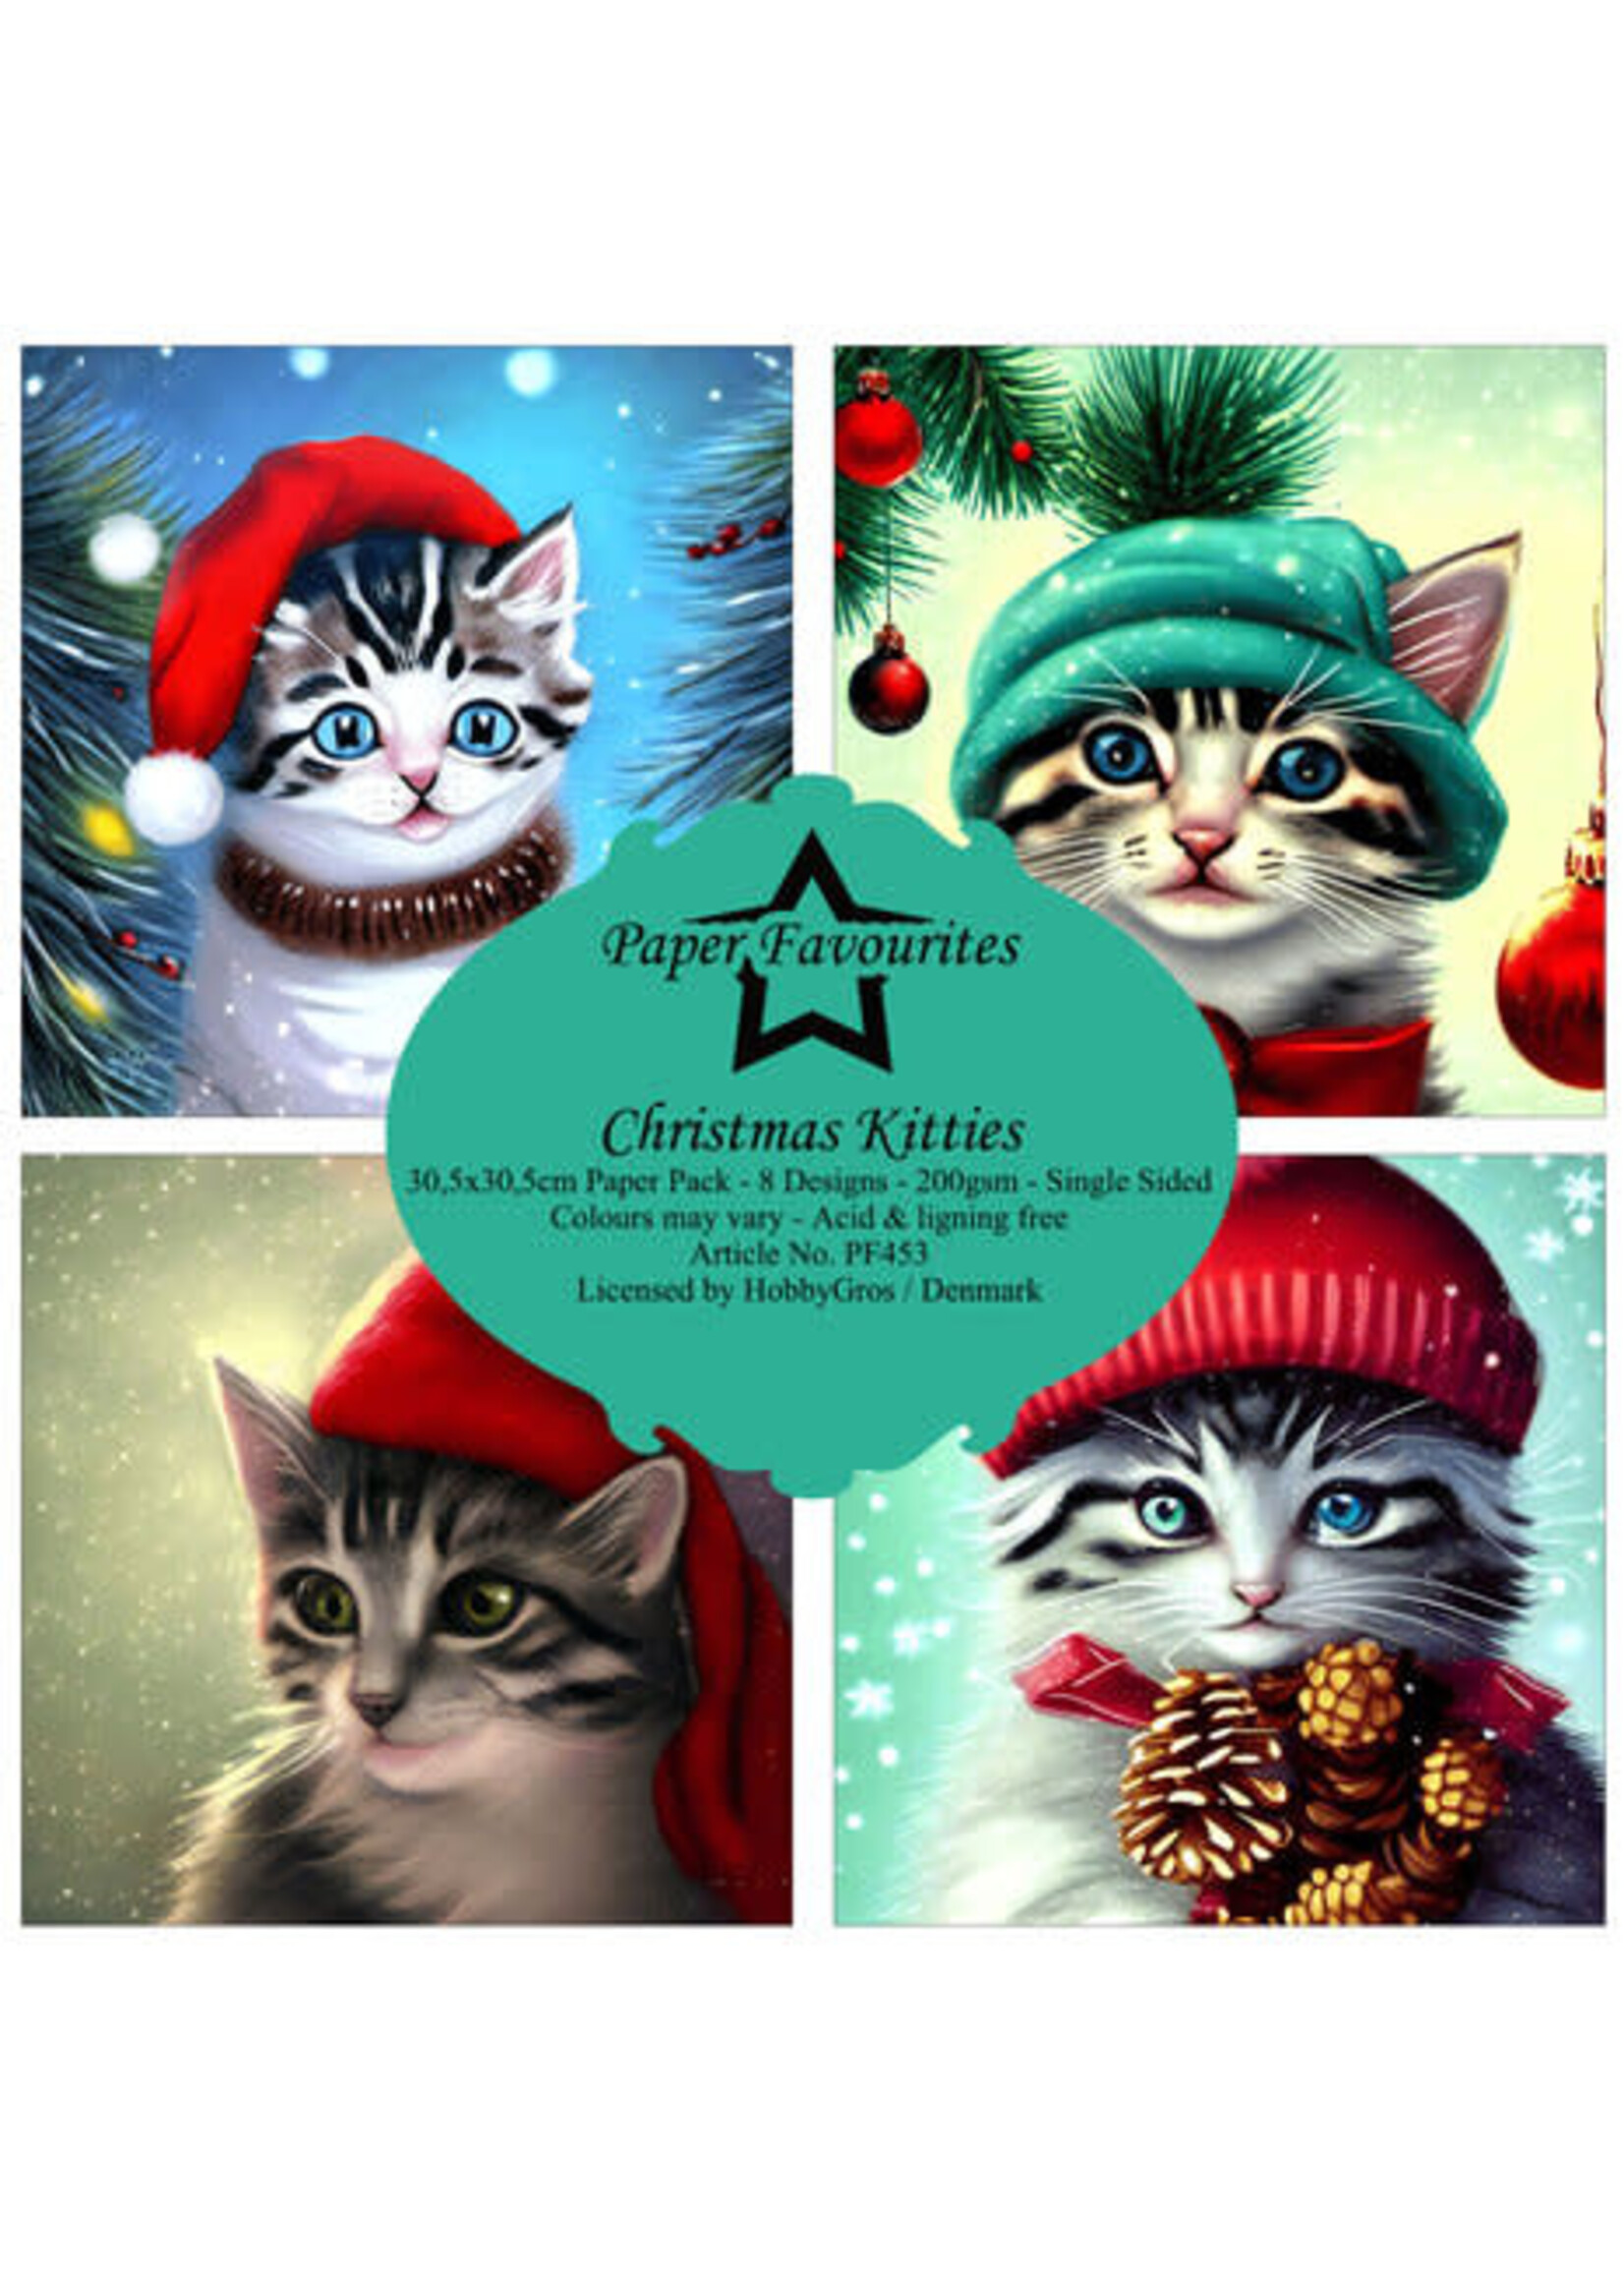 Paper Favorites Christmas Kitties 12x12 Inch Paper Pack (PF453)